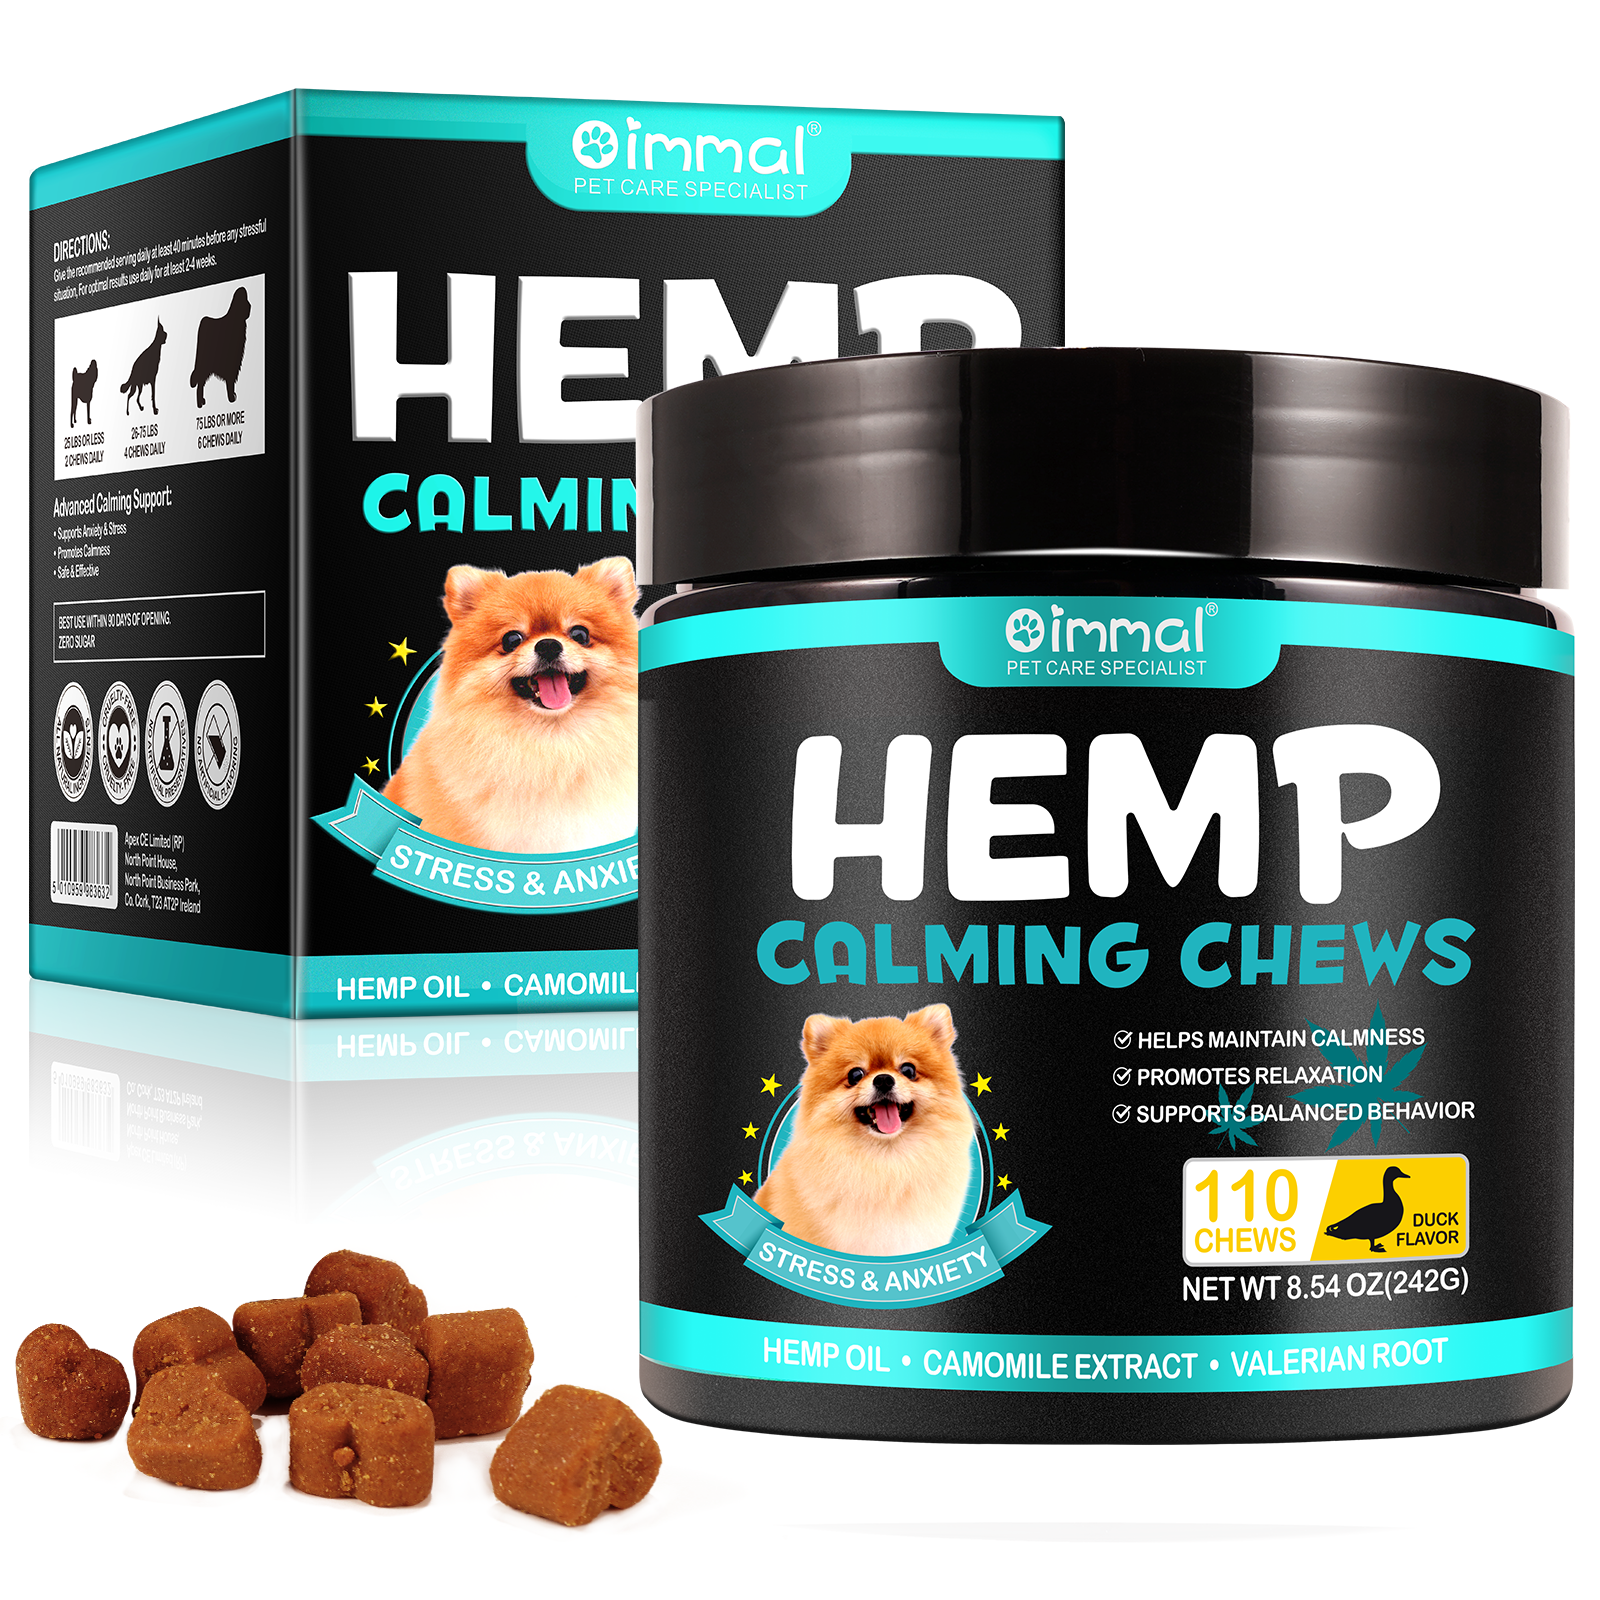 Oimmal Hemp Calming Chews / Duck Flavor - 3 Packs